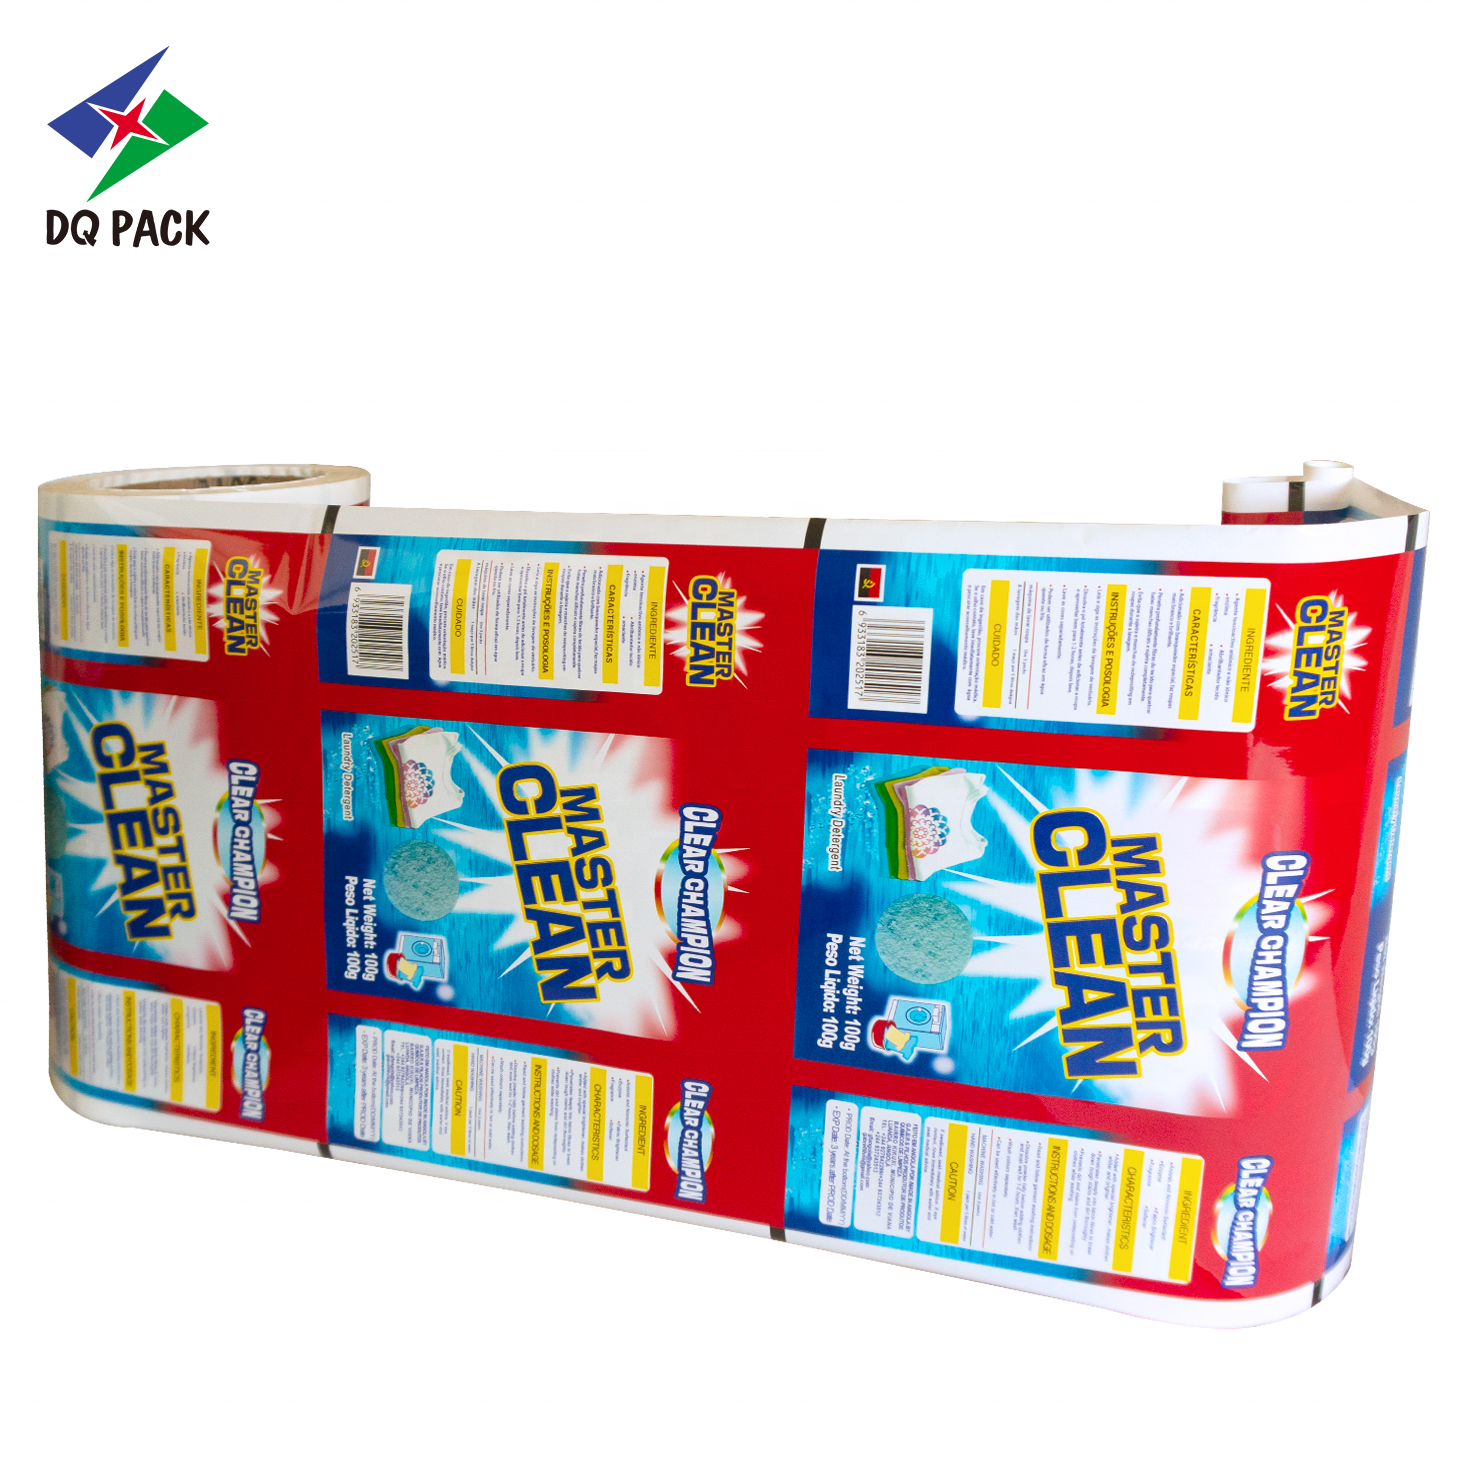 DQ PACK Custom Design flexible packaging Food grade Hot sale plastic Roll stock for washing poweder packaging film